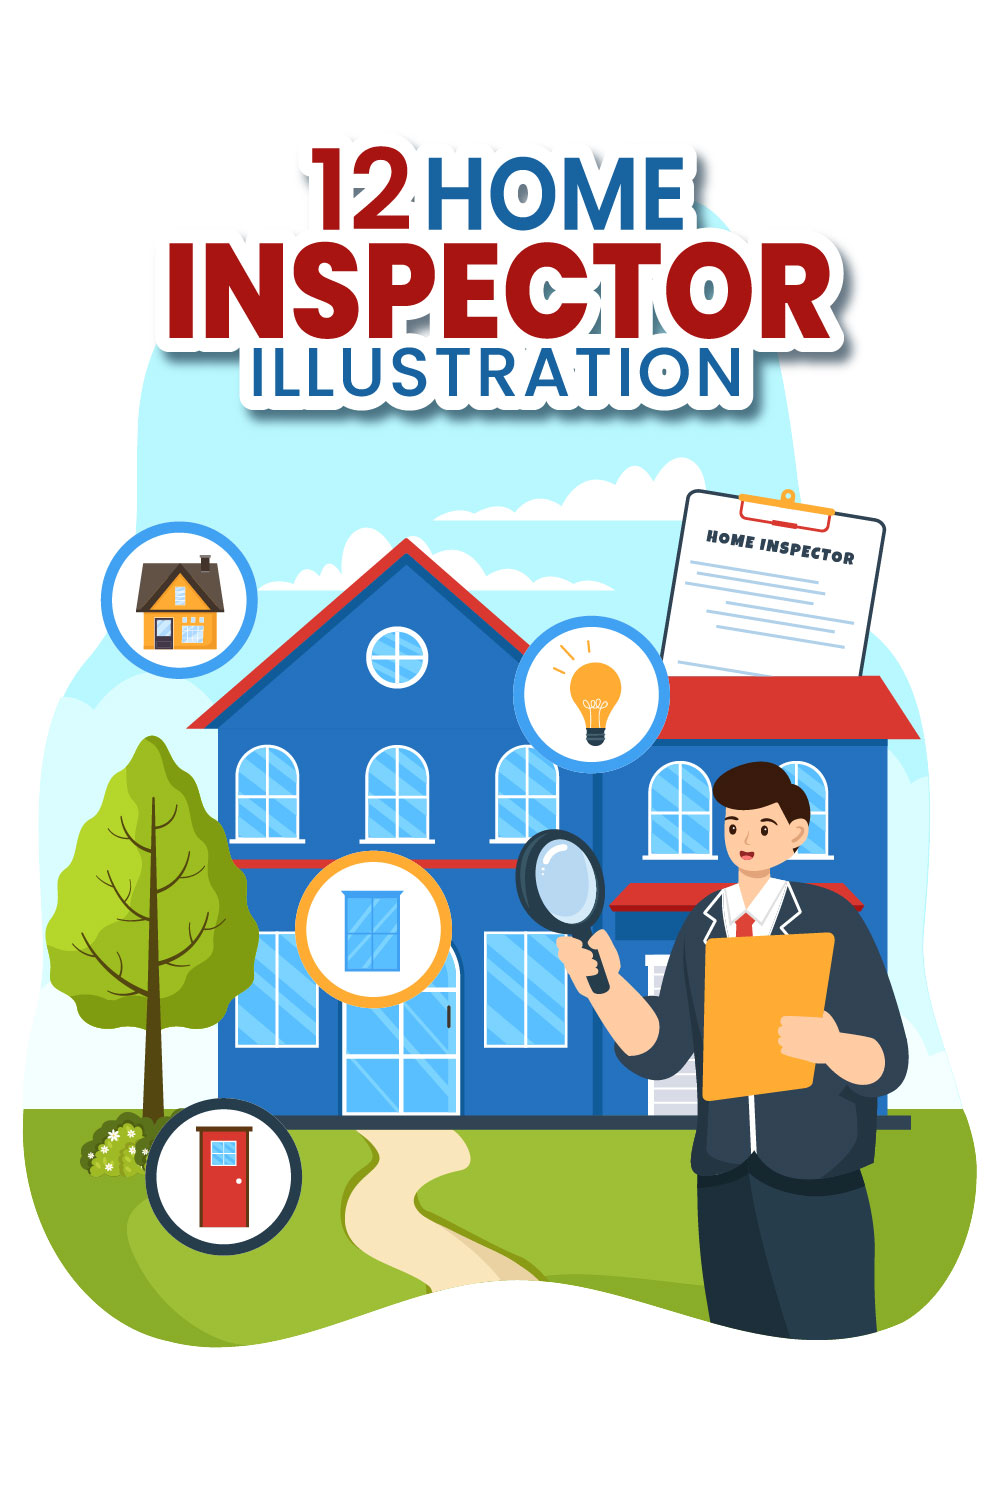 12 Home Inspector Illustration pinterest preview image.